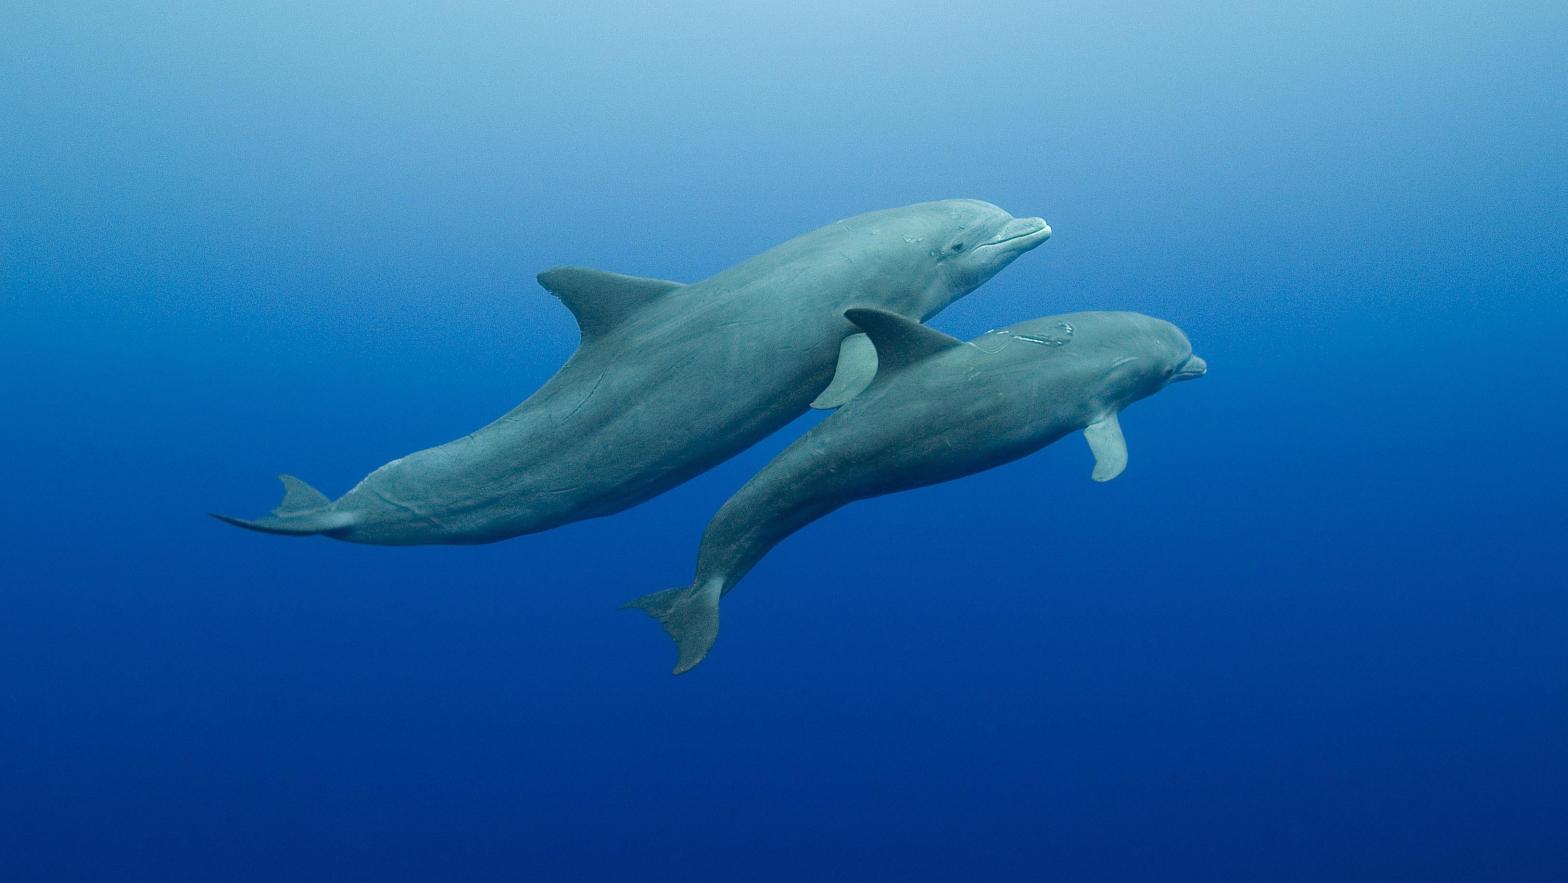 A bottlenose dolphin (Tursiops truncatus) mother and her calf. (Image: belizediversity, Shutterstock)